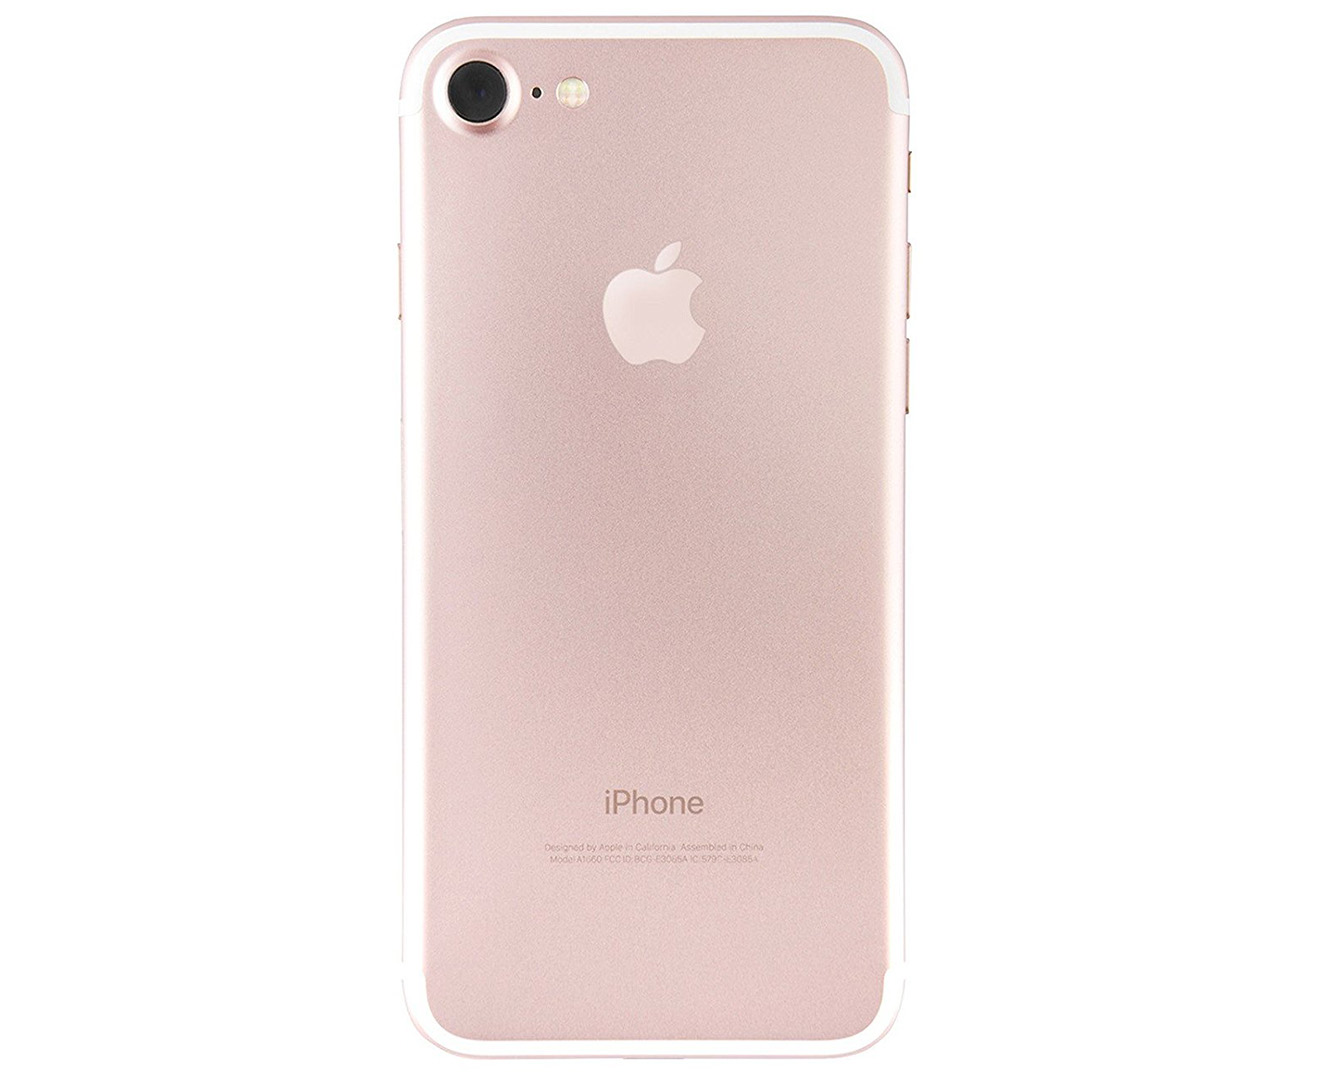 Apple iPhone 7 32GB Unlocked - Rose Gold - A Grade Pre Owned | Catch.com.au